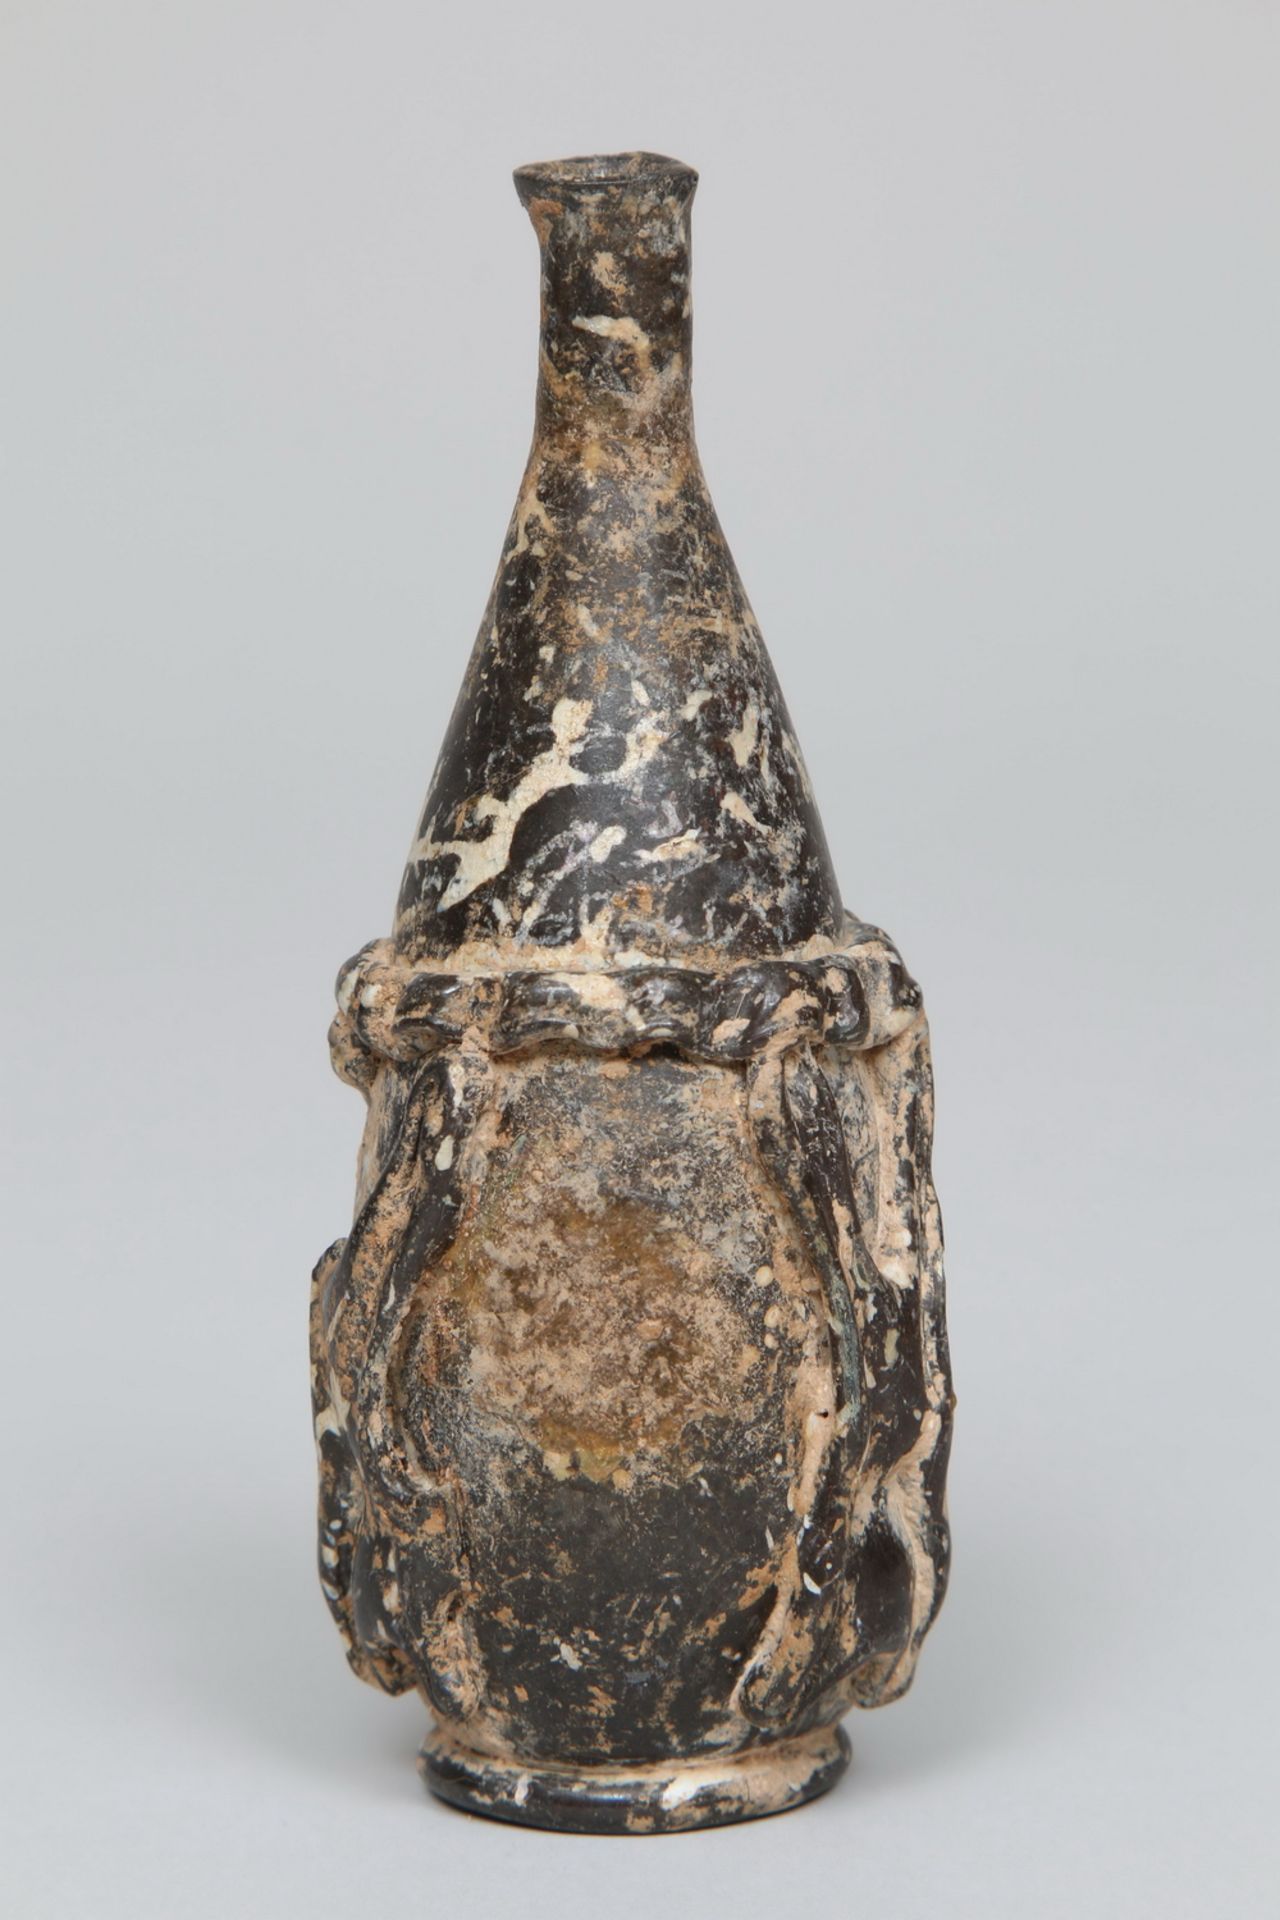 Syrian glass flacon, ca. 5th century BC - Image 2 of 4